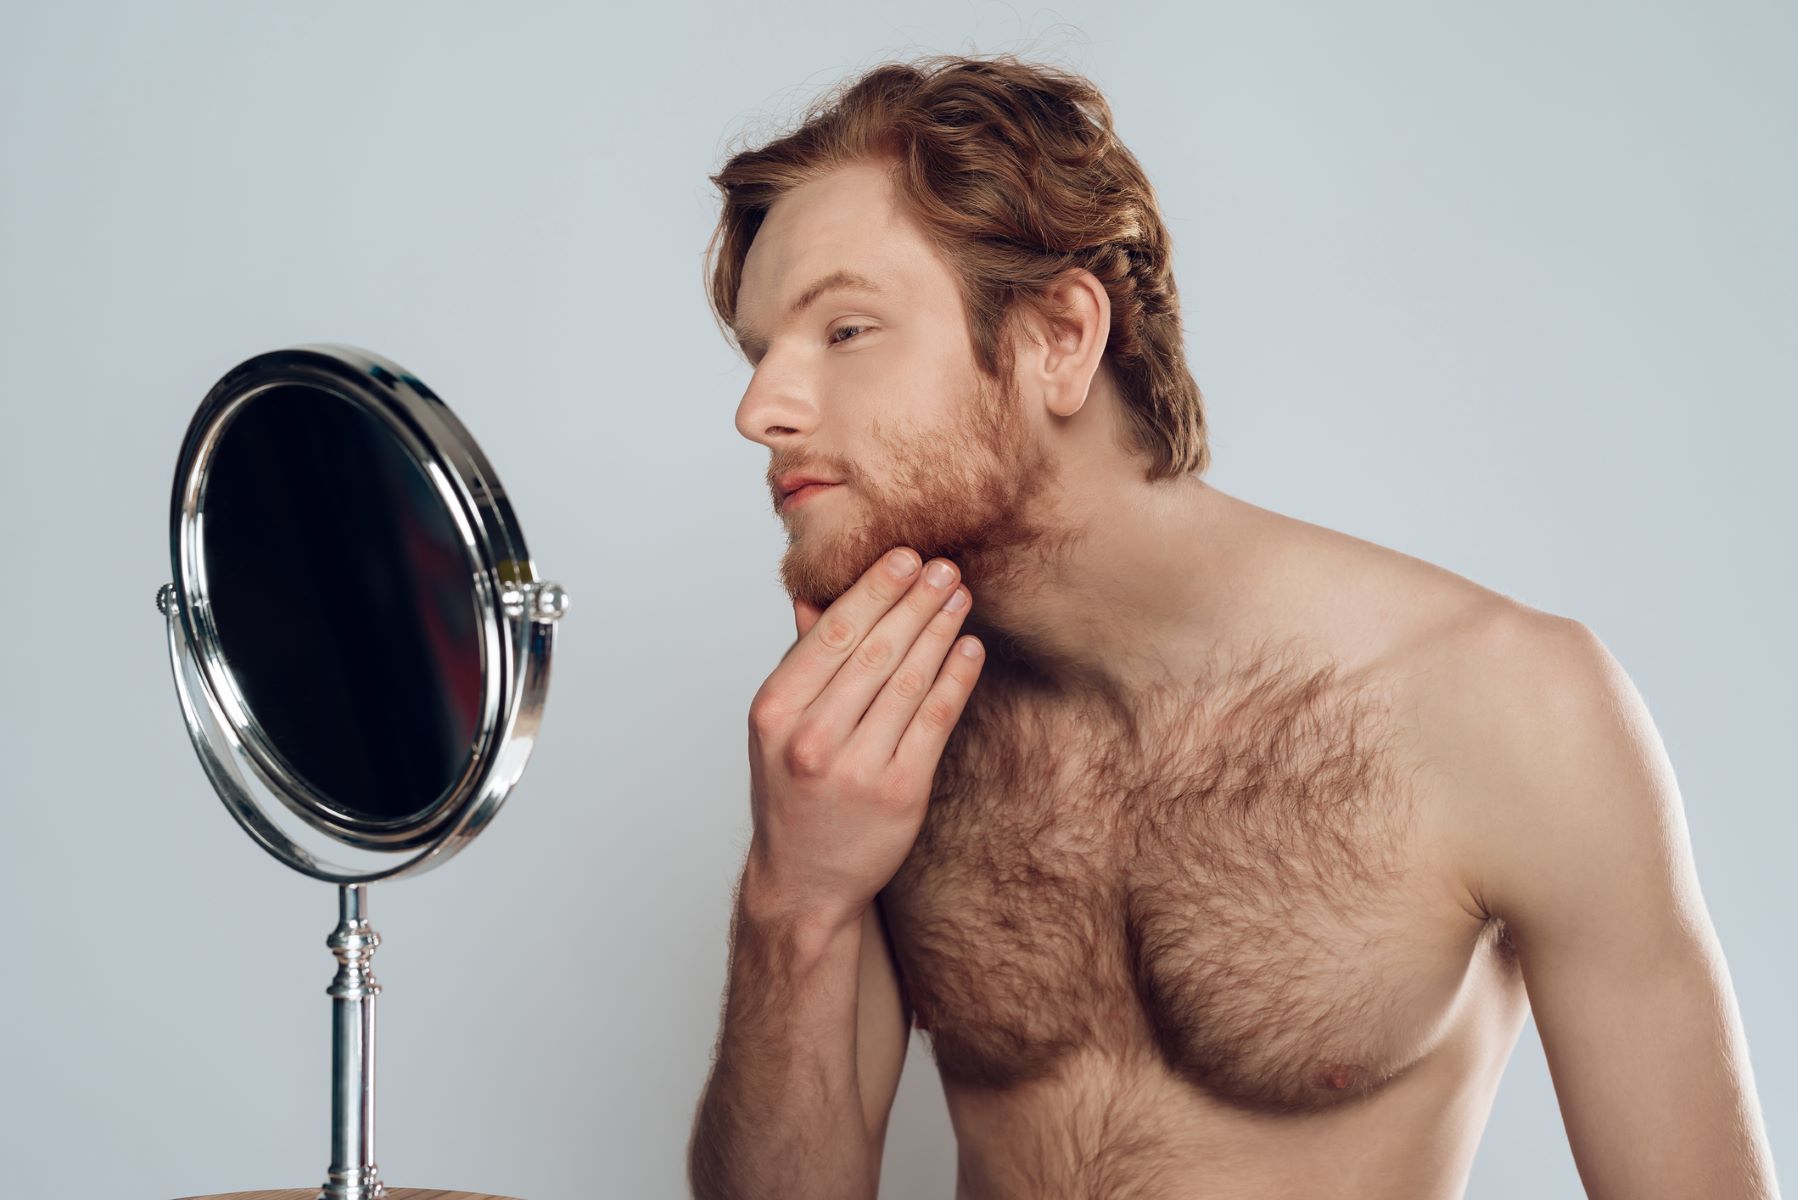 A young man struggling to grow a full beard